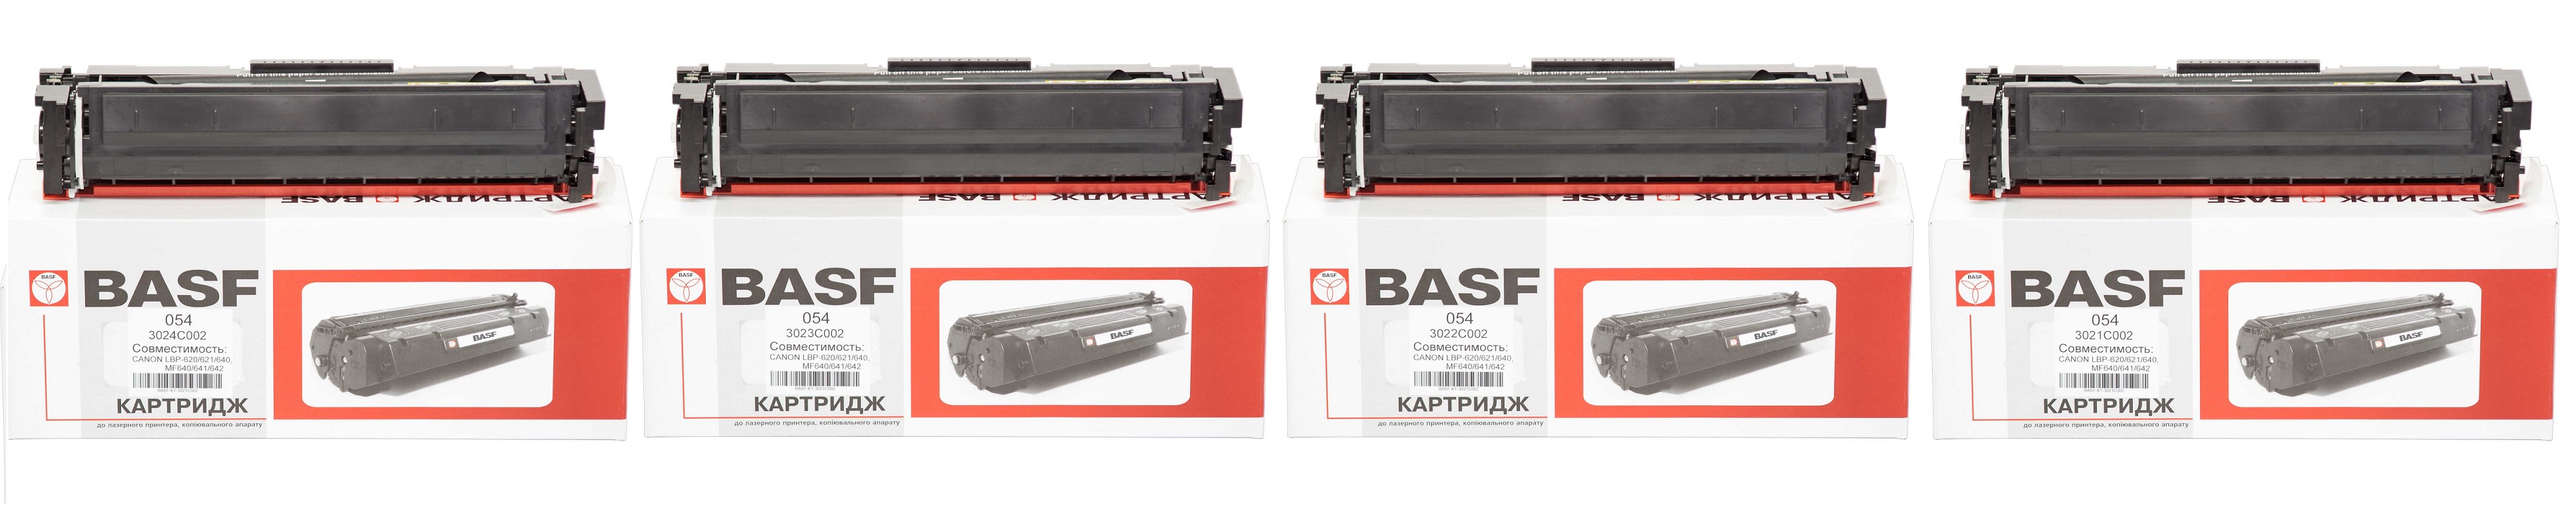 Картриджи BASF-KT-CRG045 для Canon i-Sensys MF-631cn Купить картриджи.